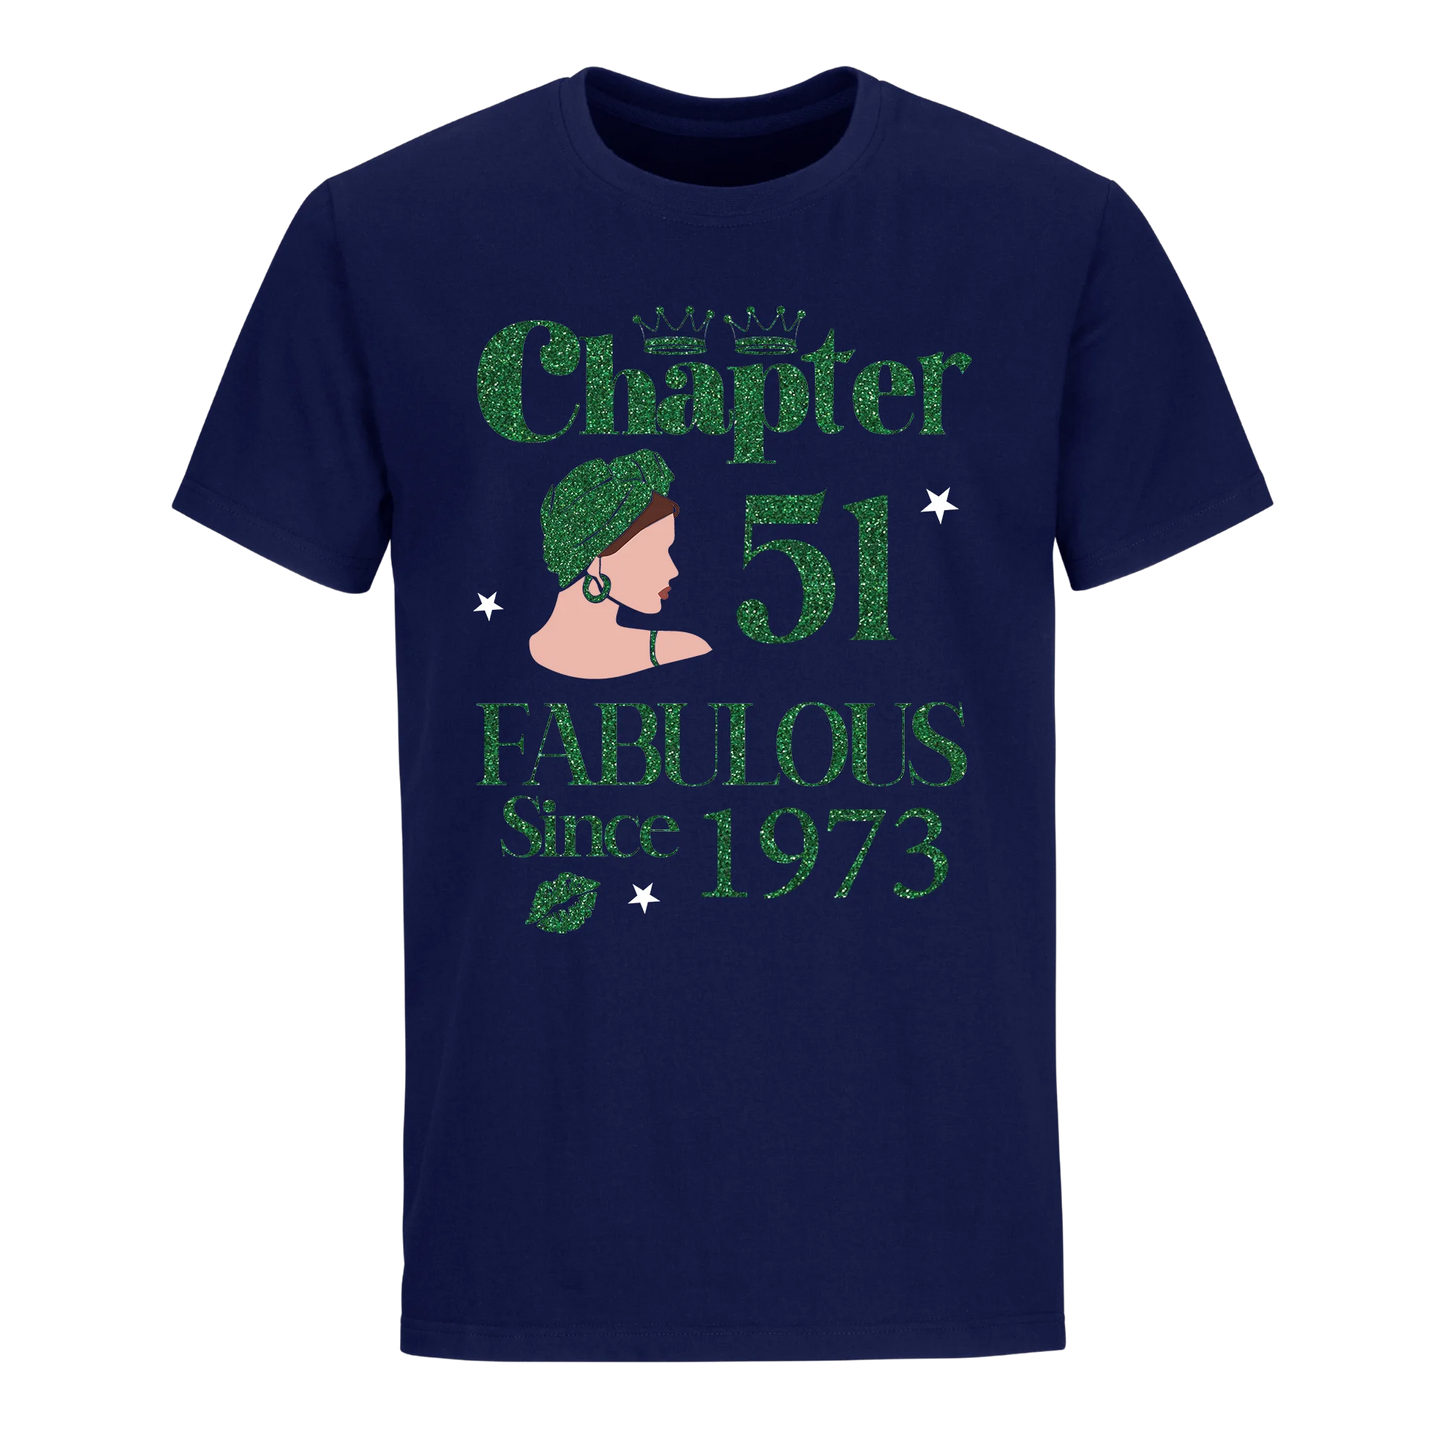 CHAPTER 51ST FABULOUS SINCE 1973 GREEN UNISEX SHIRT